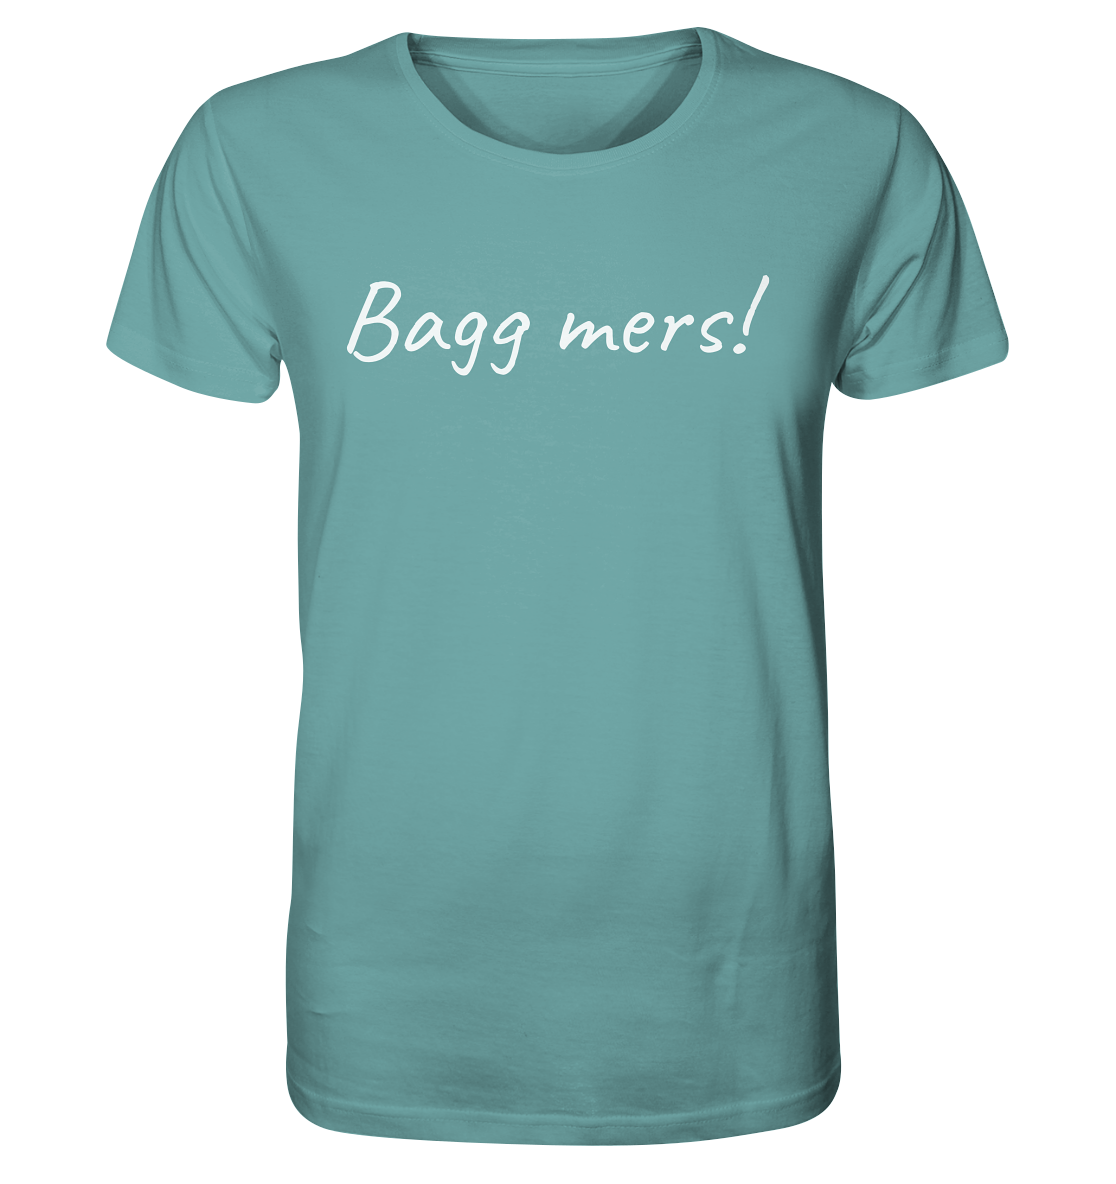 #Bagg mers! - Organic Shirt